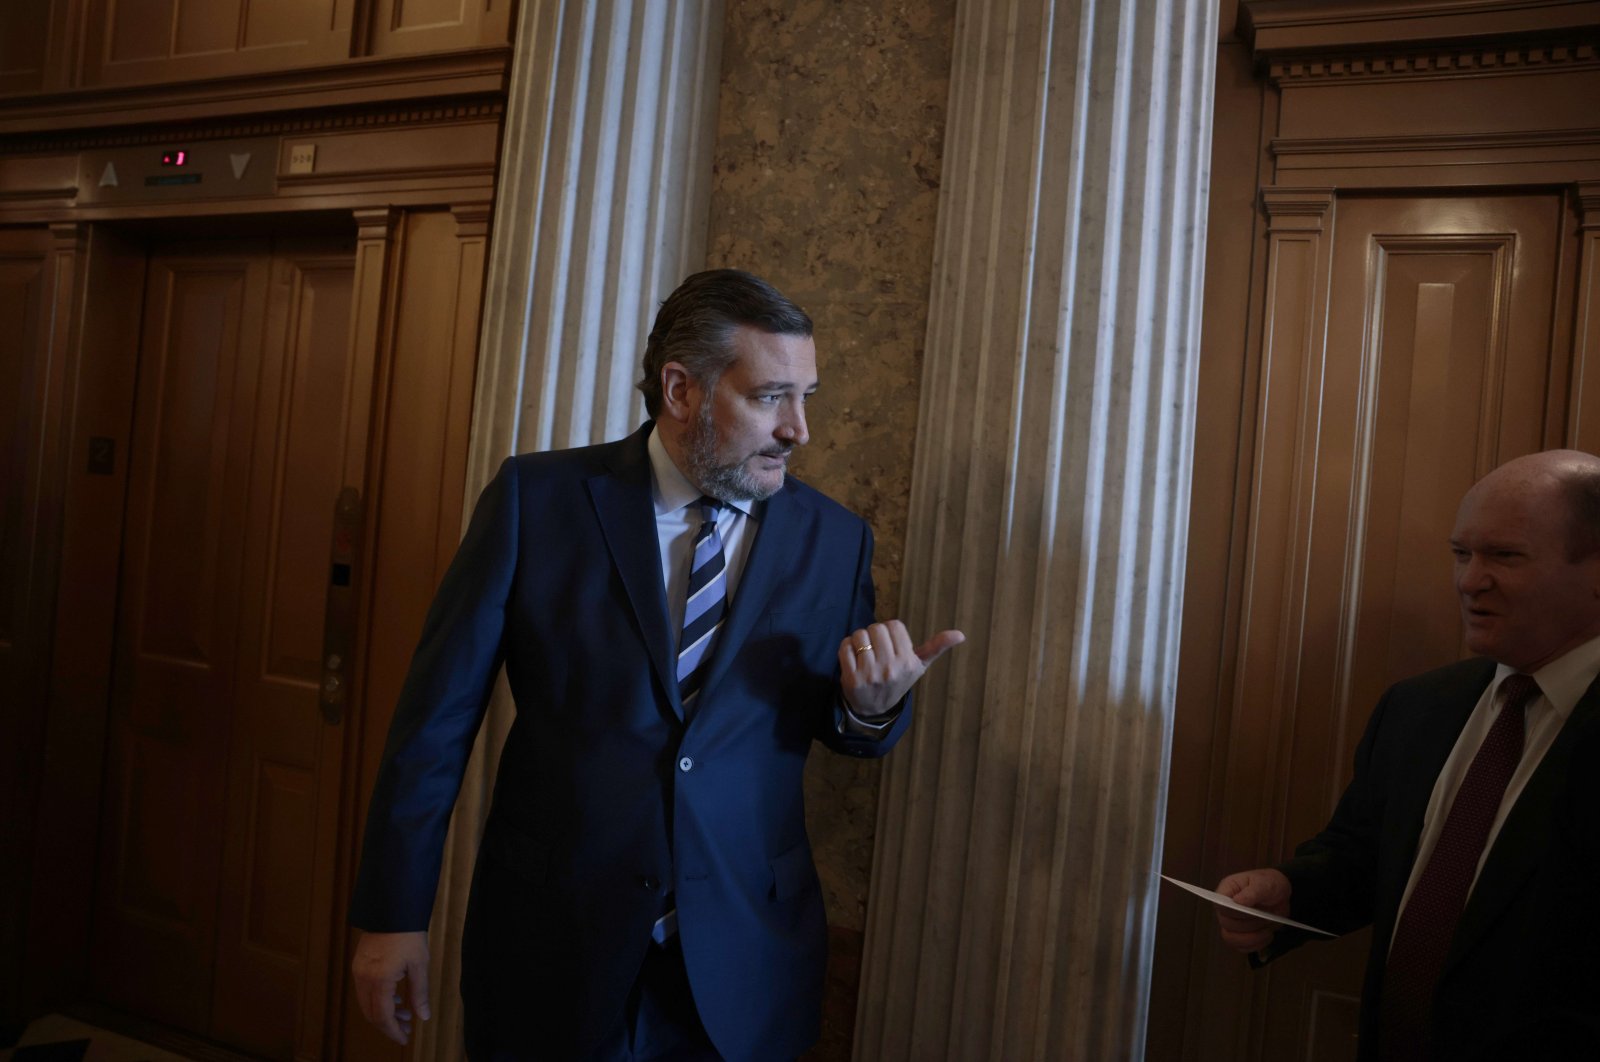 Sen. Ted Cruz (R-TX) speaks to Sen. Chris Coons (D-DE) as they walk to the Senate Chambers of the U.S. Capitol Building in Washington, D.C., U.S., Dec. 15, 2021. (AFP Photo)